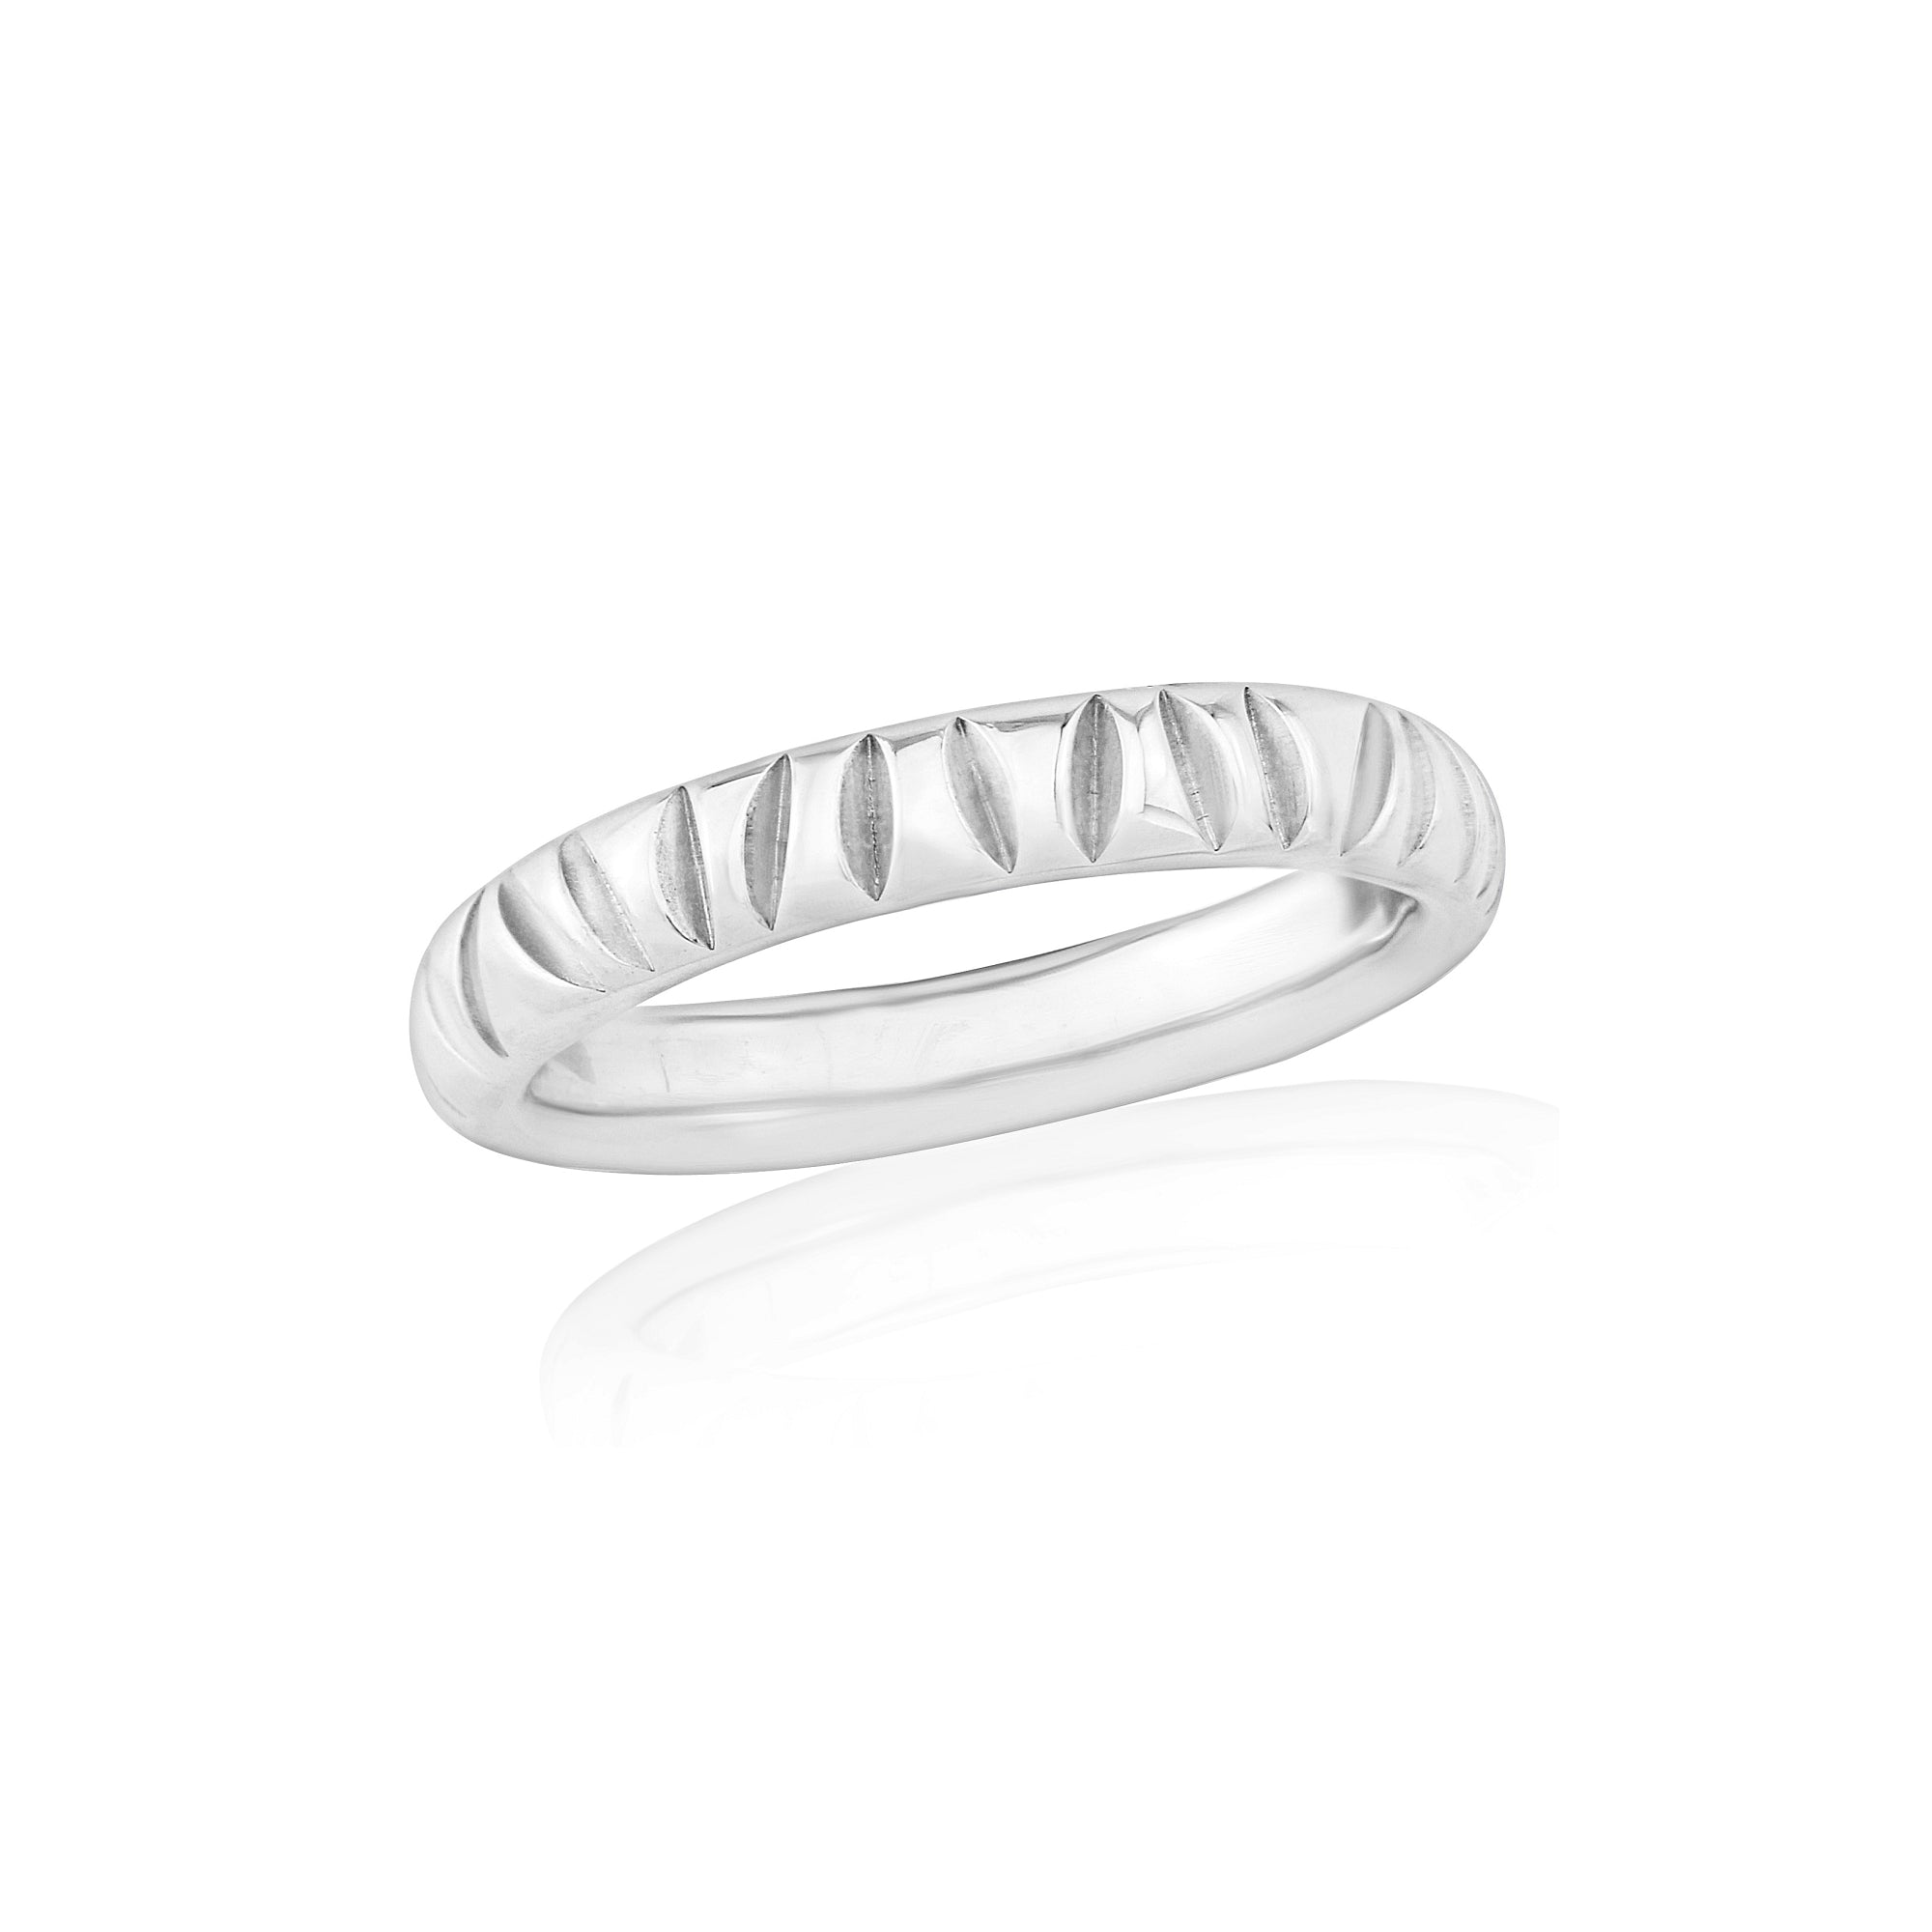 Handcrafted Irregular Textured Silver Elena Ring